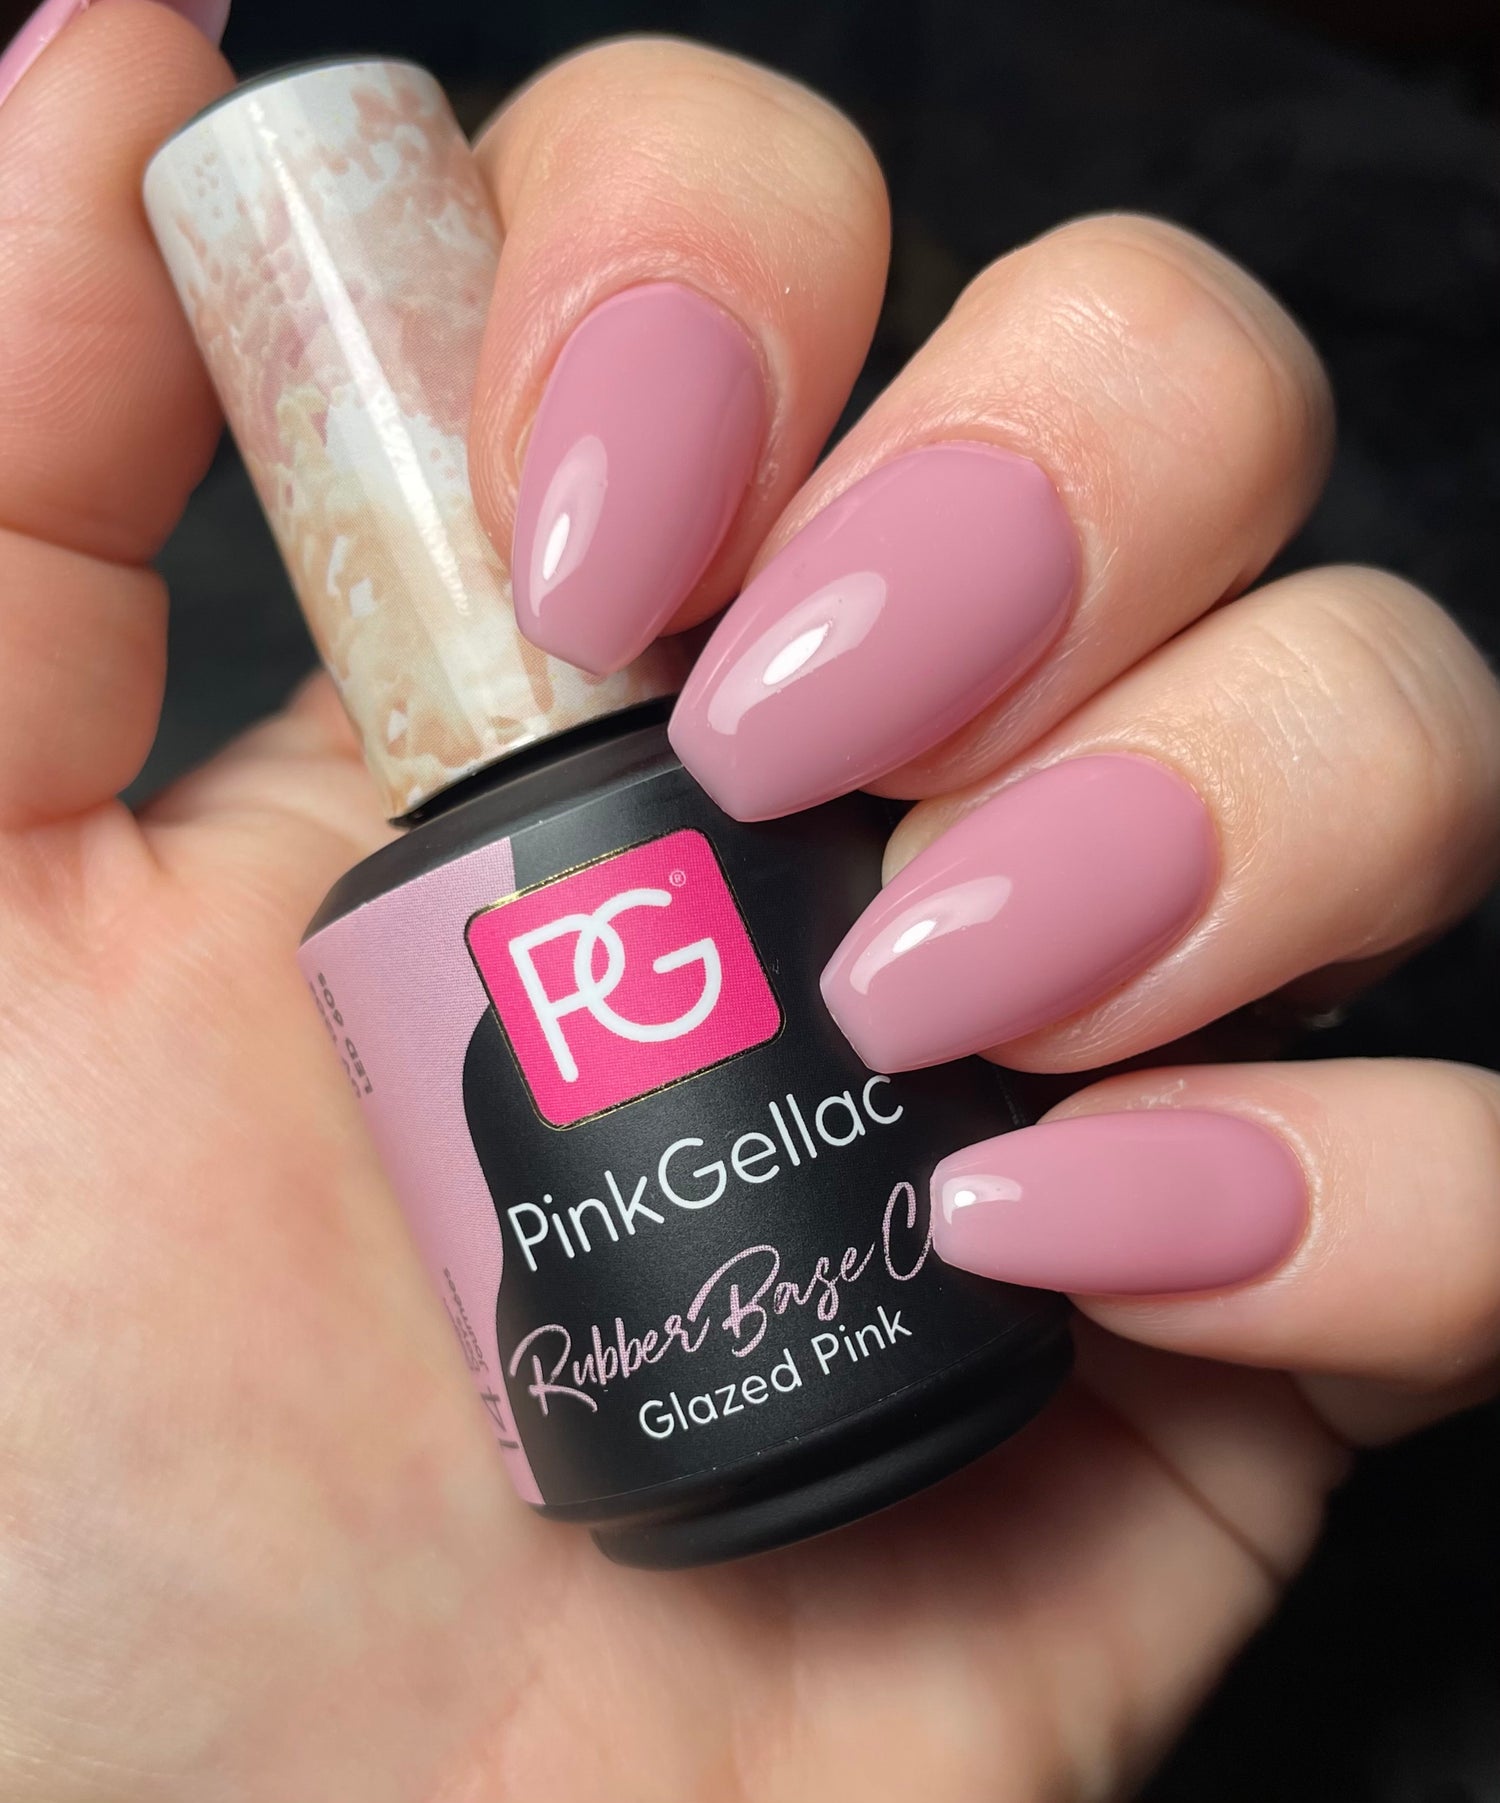 #RBC Glazed Pink